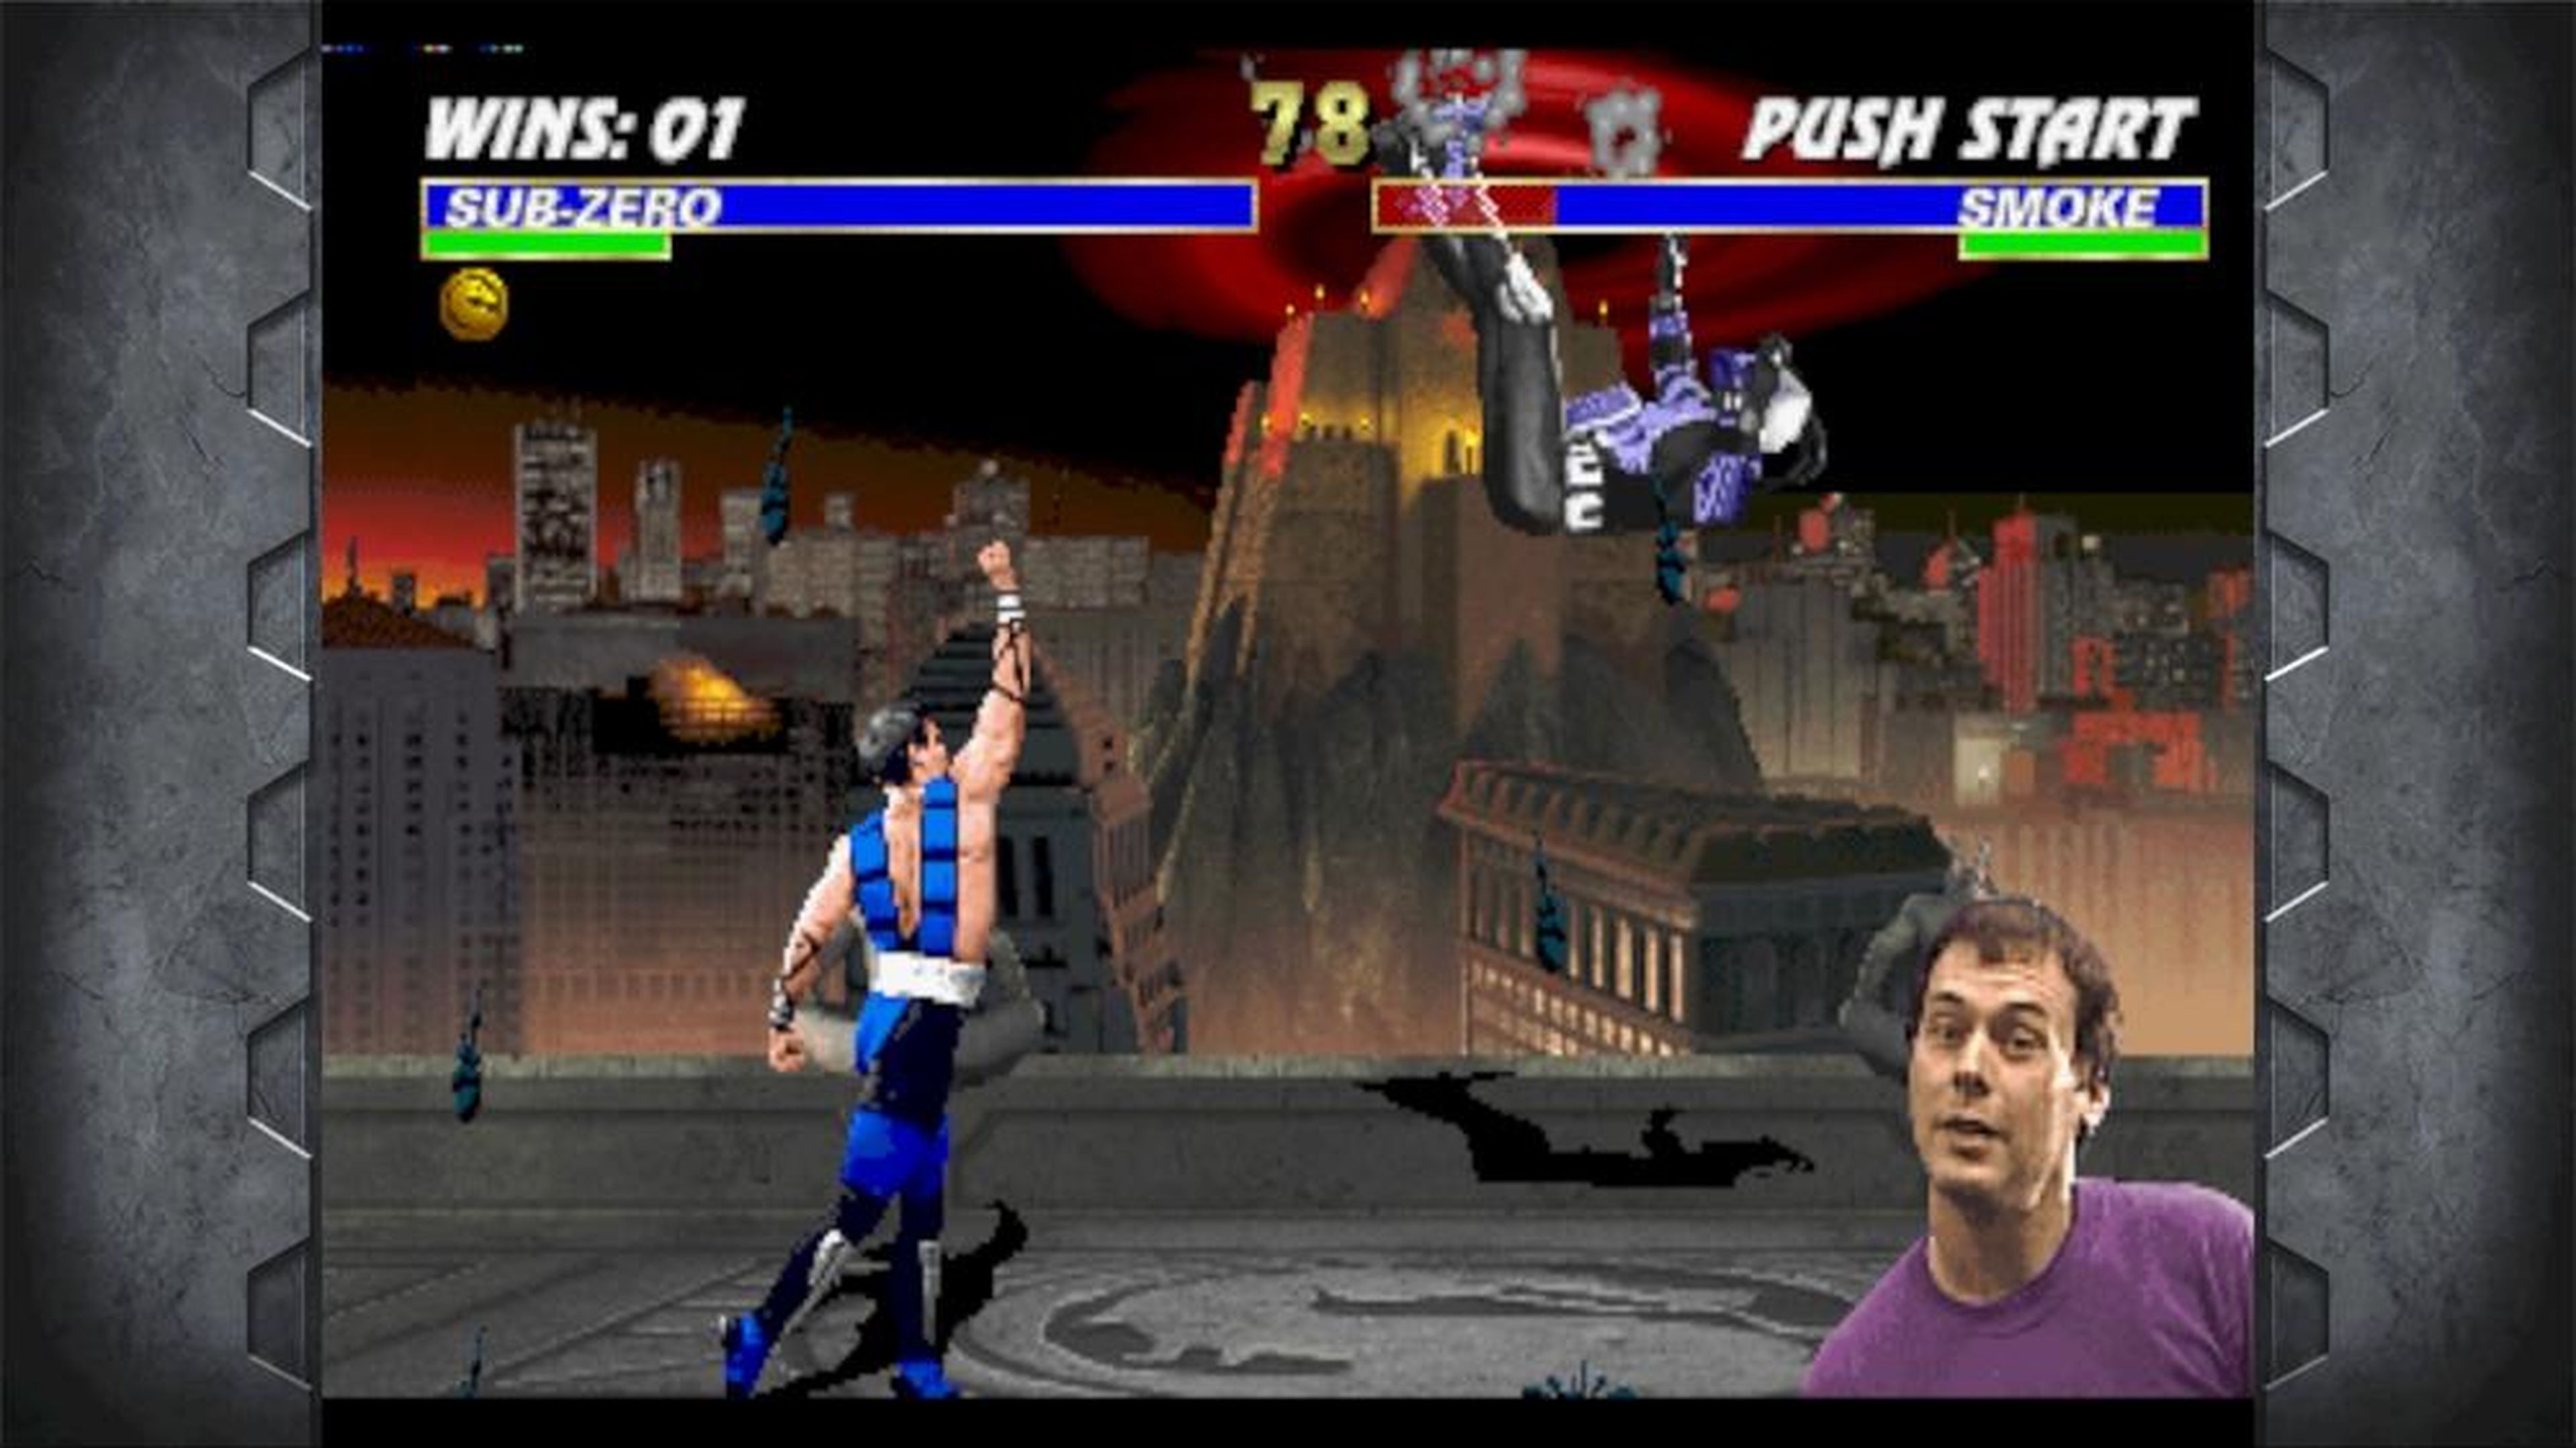 1995 — "Mortal Kombat III"